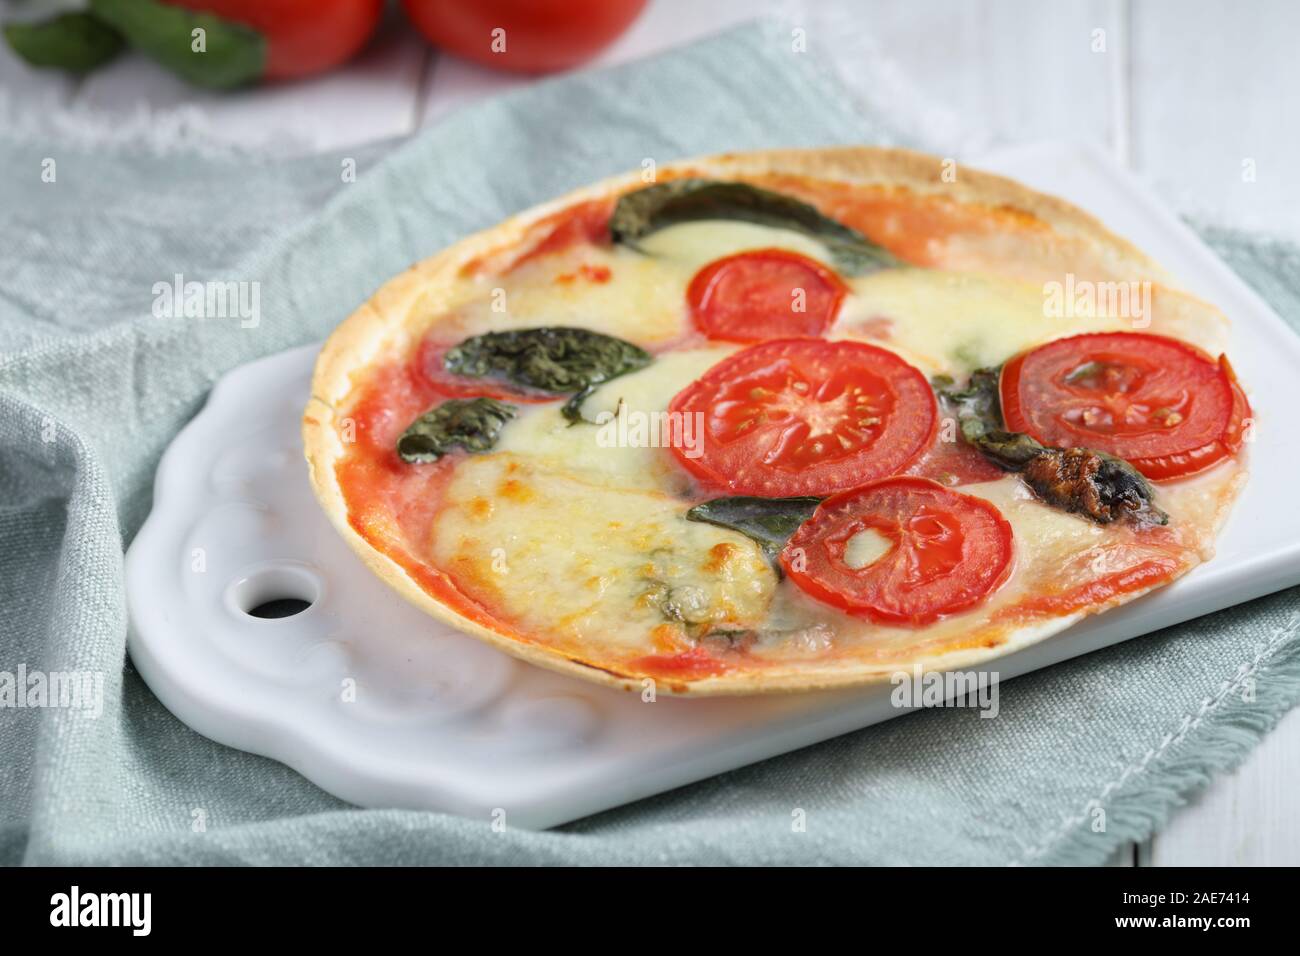 Tortilla pizza Margherita with mozzarella, tomato, and basil on a rustic table Stock Photo